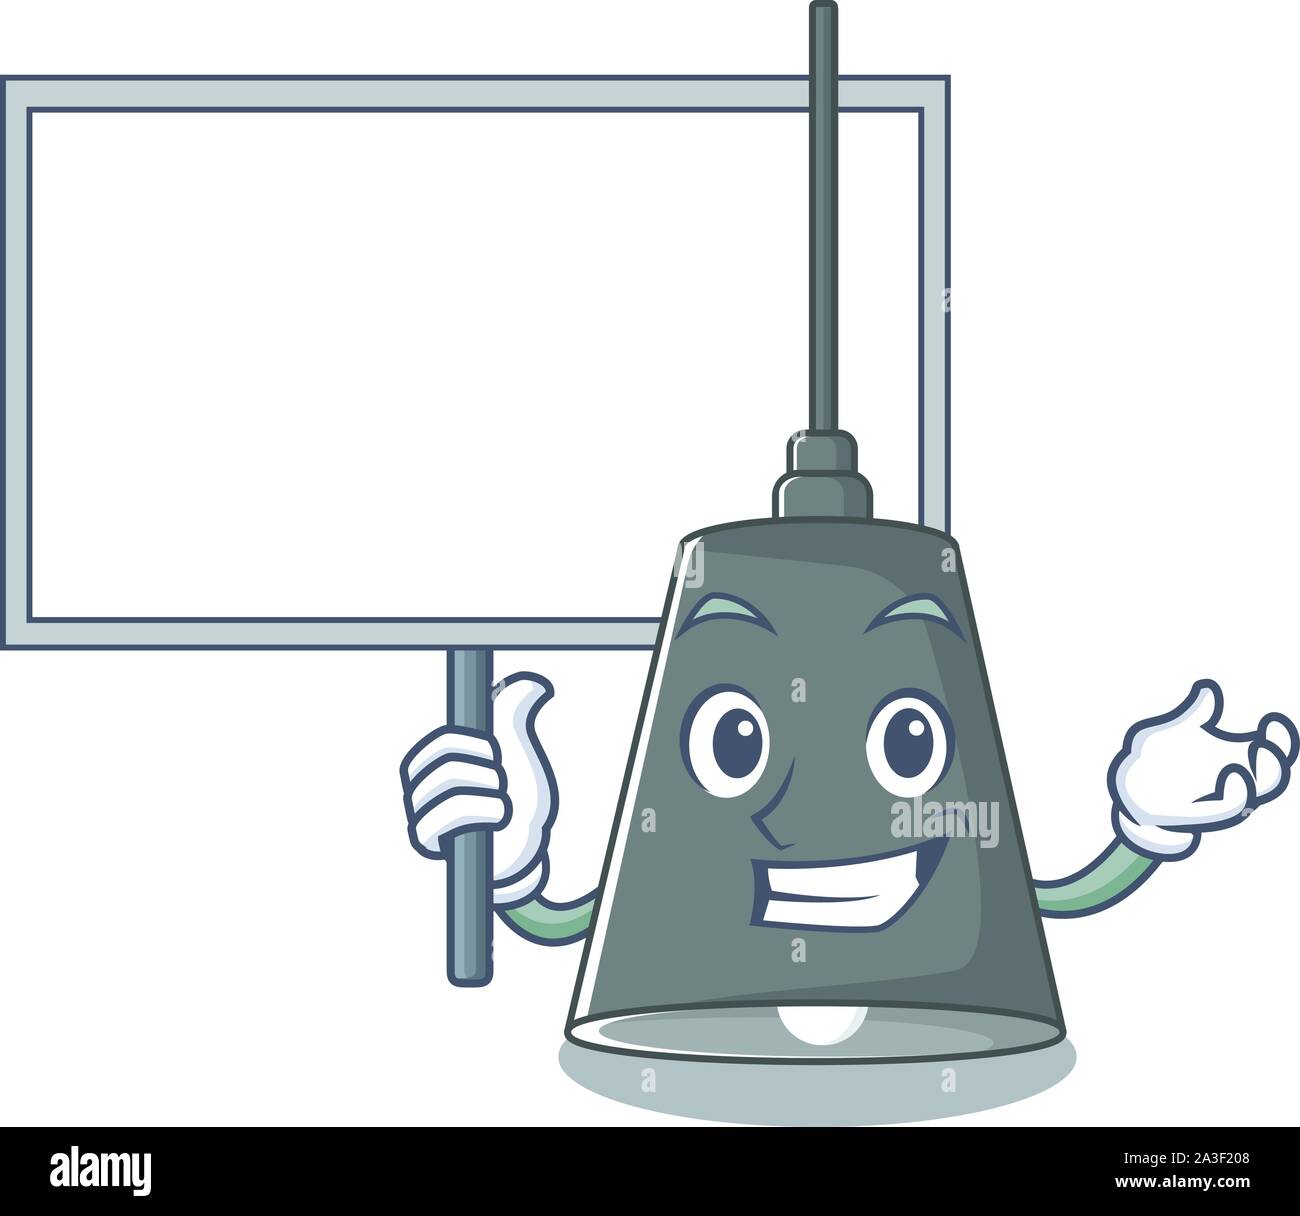 Bring board pendant lamp cartoon with mascot shape Stock Vector